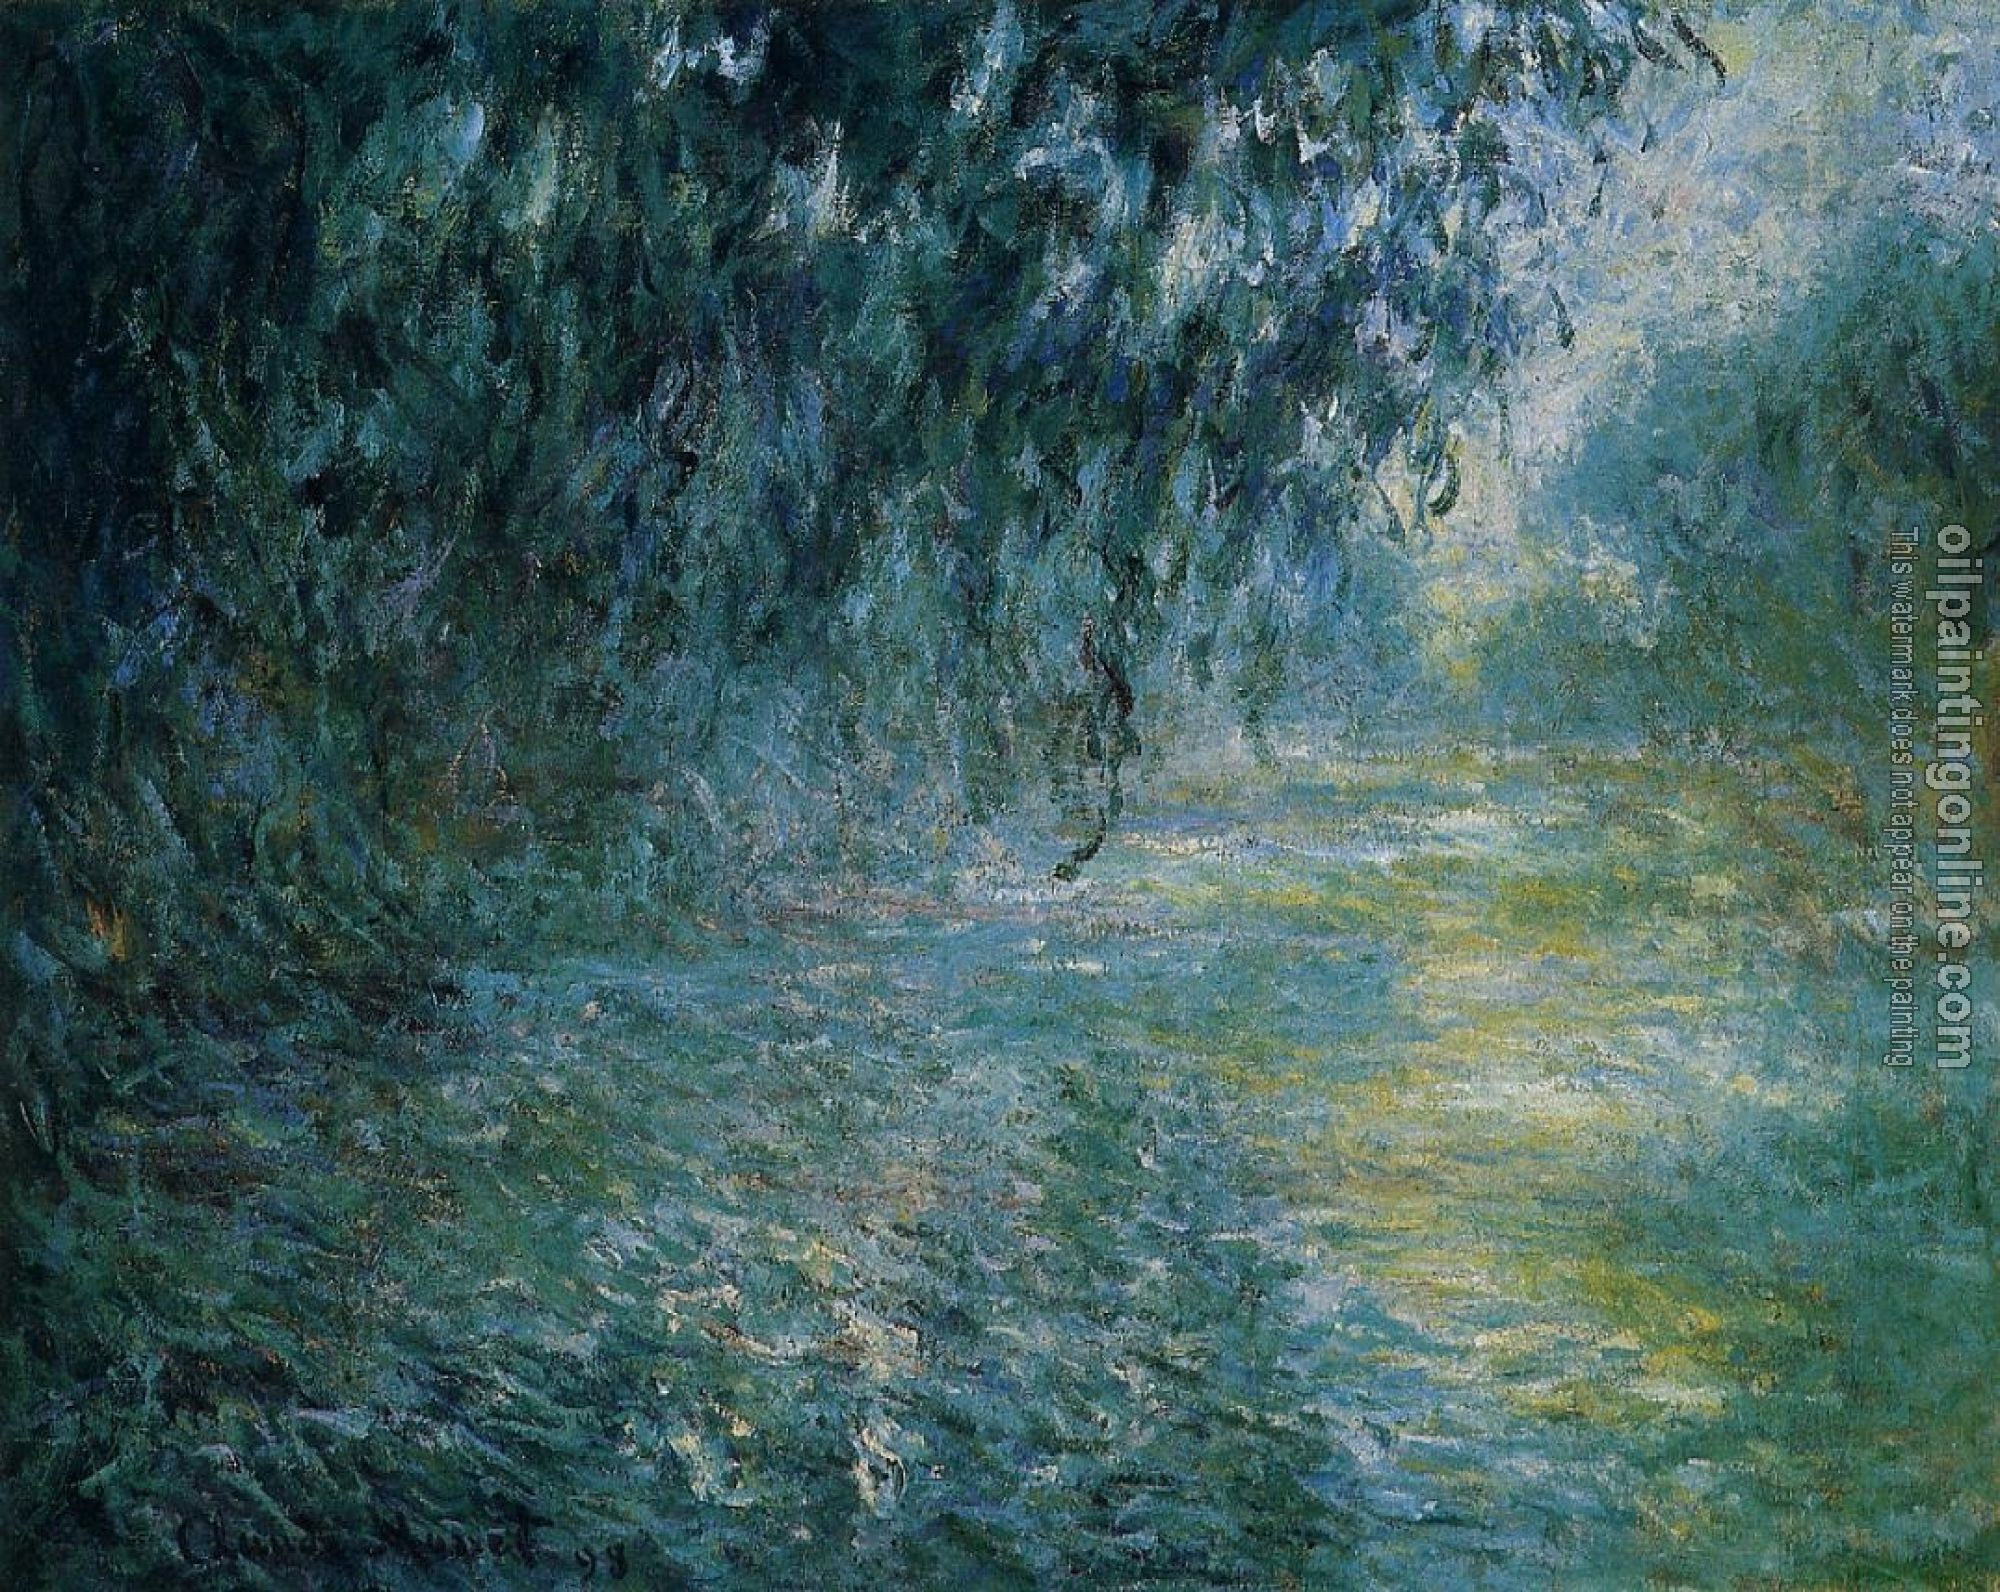 Monet, Claude Oscar - Morning on the Seine in the Rain